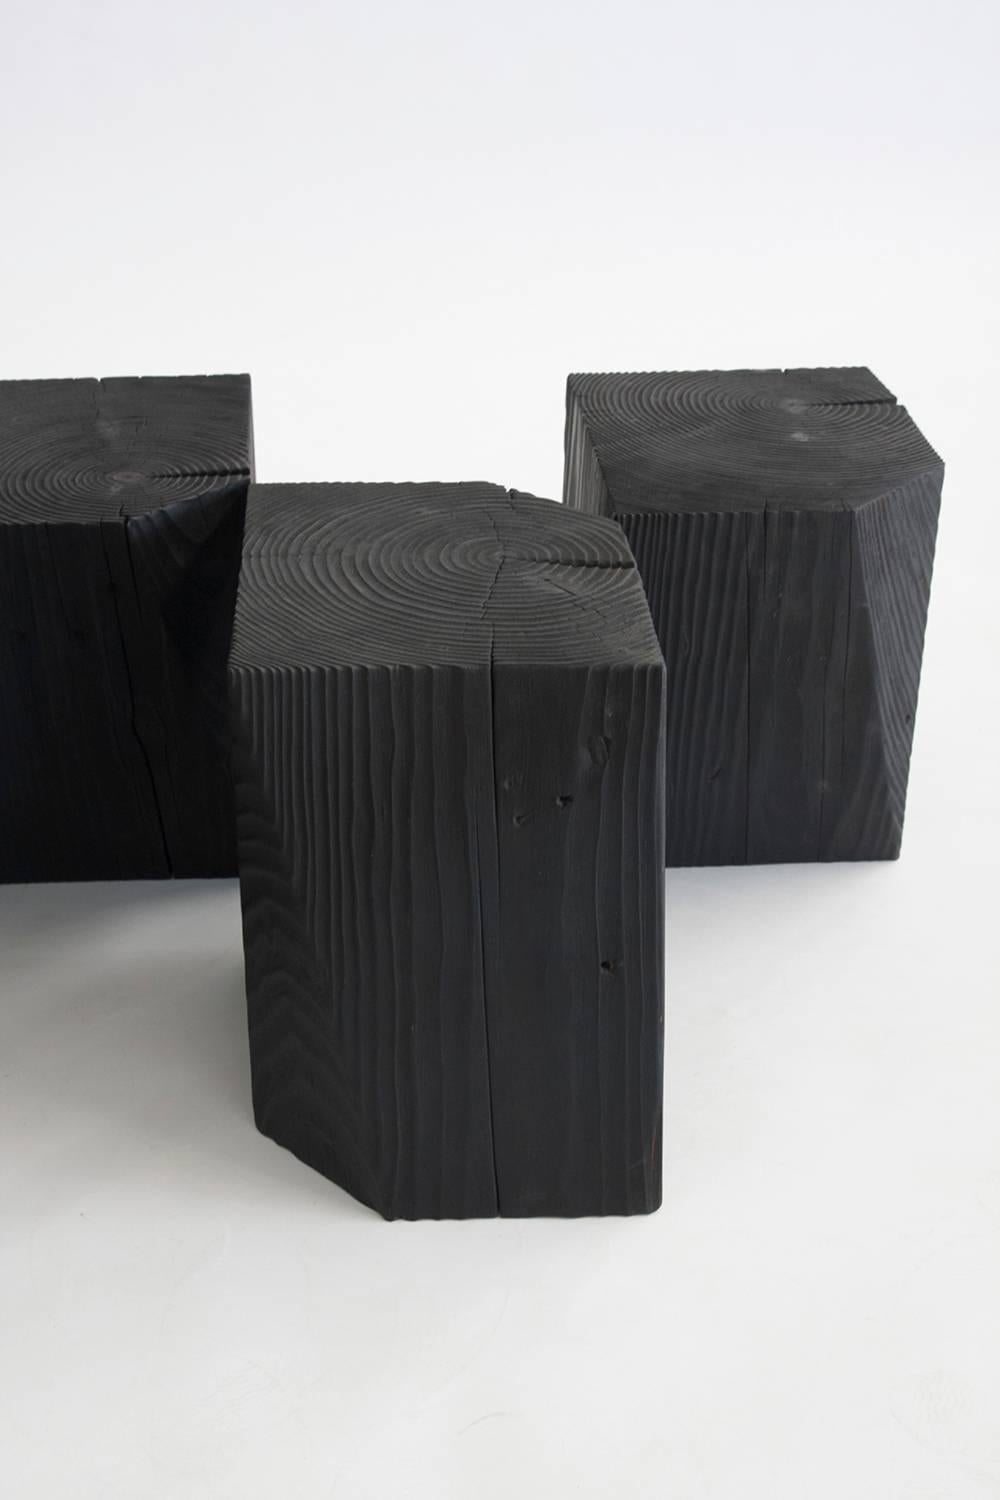 Contemporary Customization for Sarah, Charcoal Blocks, Sculptural, Geometric, Tables